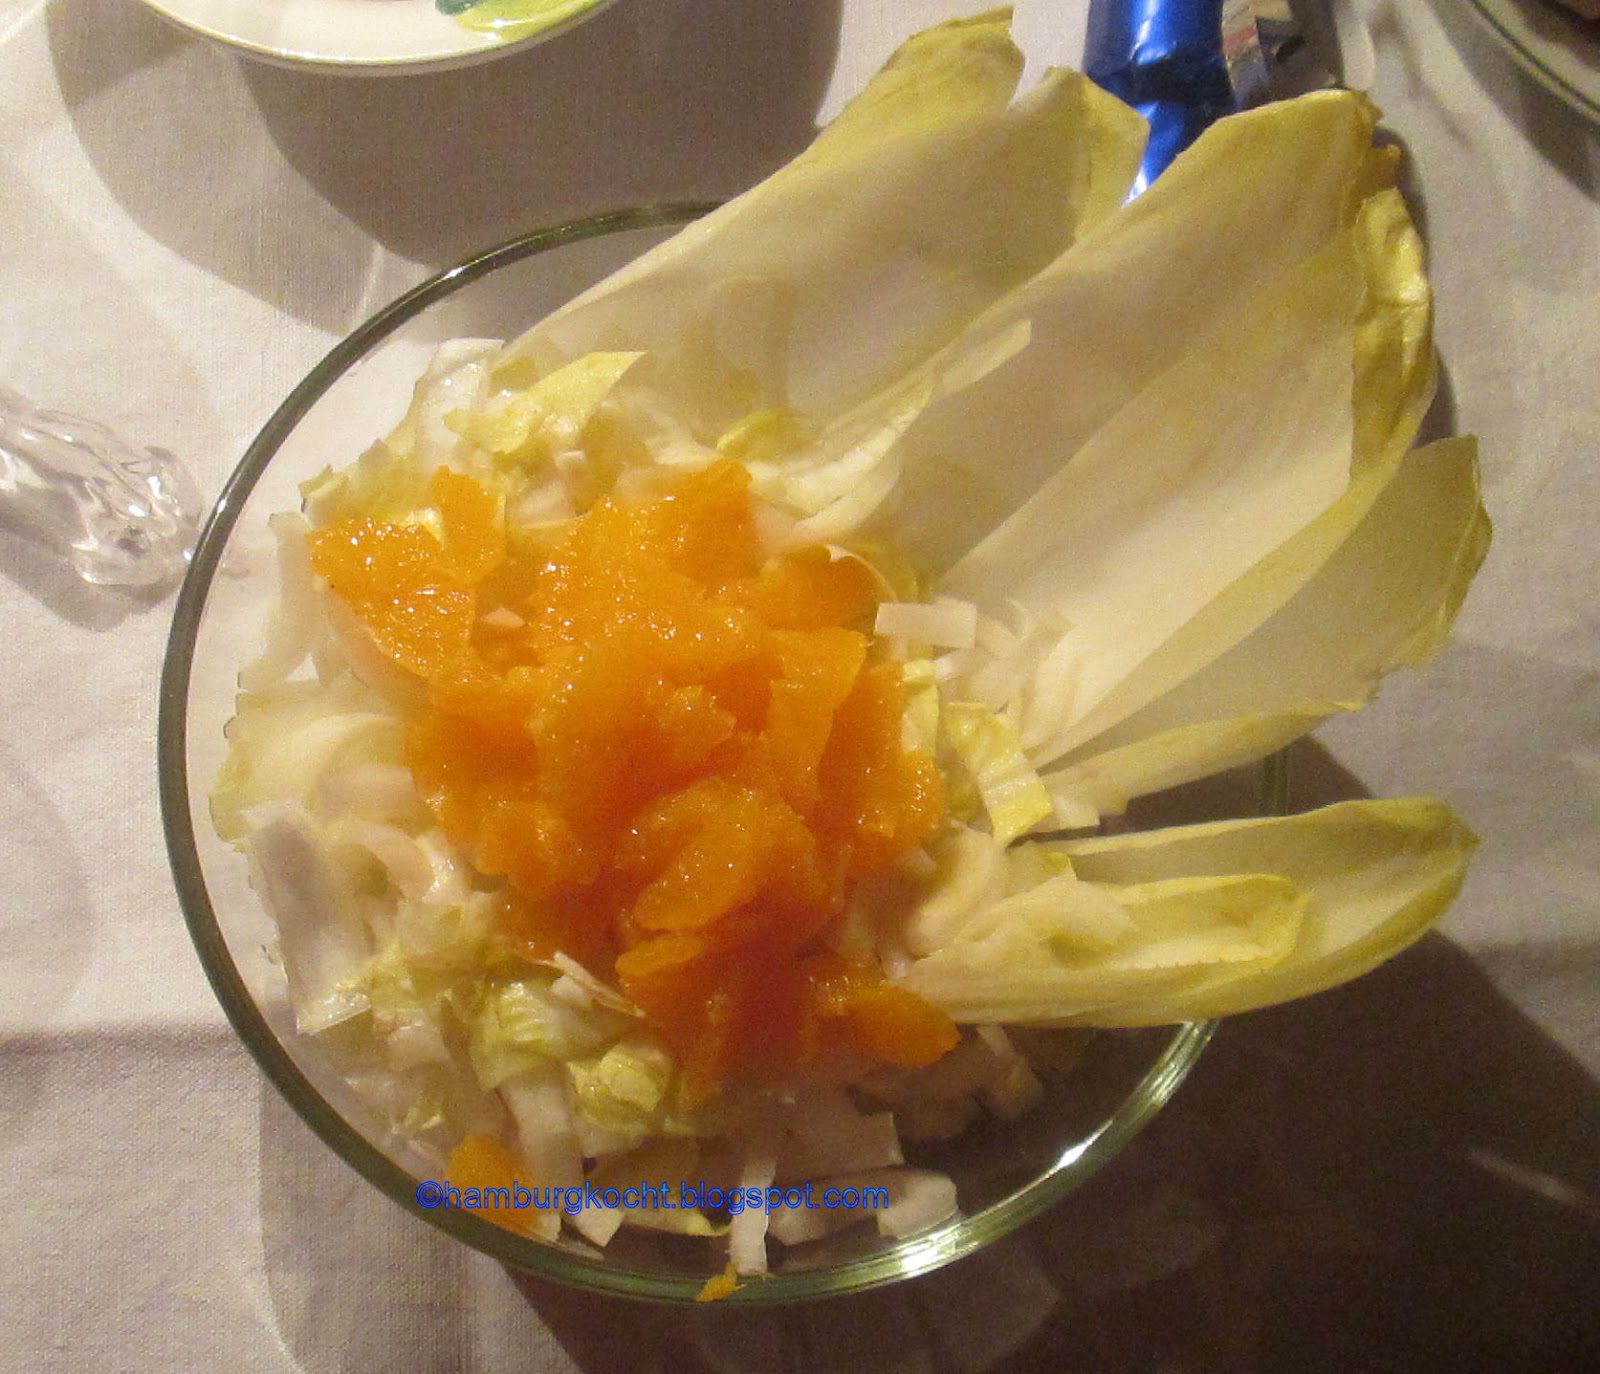 Hamburg kocht!: Szenen einer Ehe: Chicorée-Mandarinen-Salat